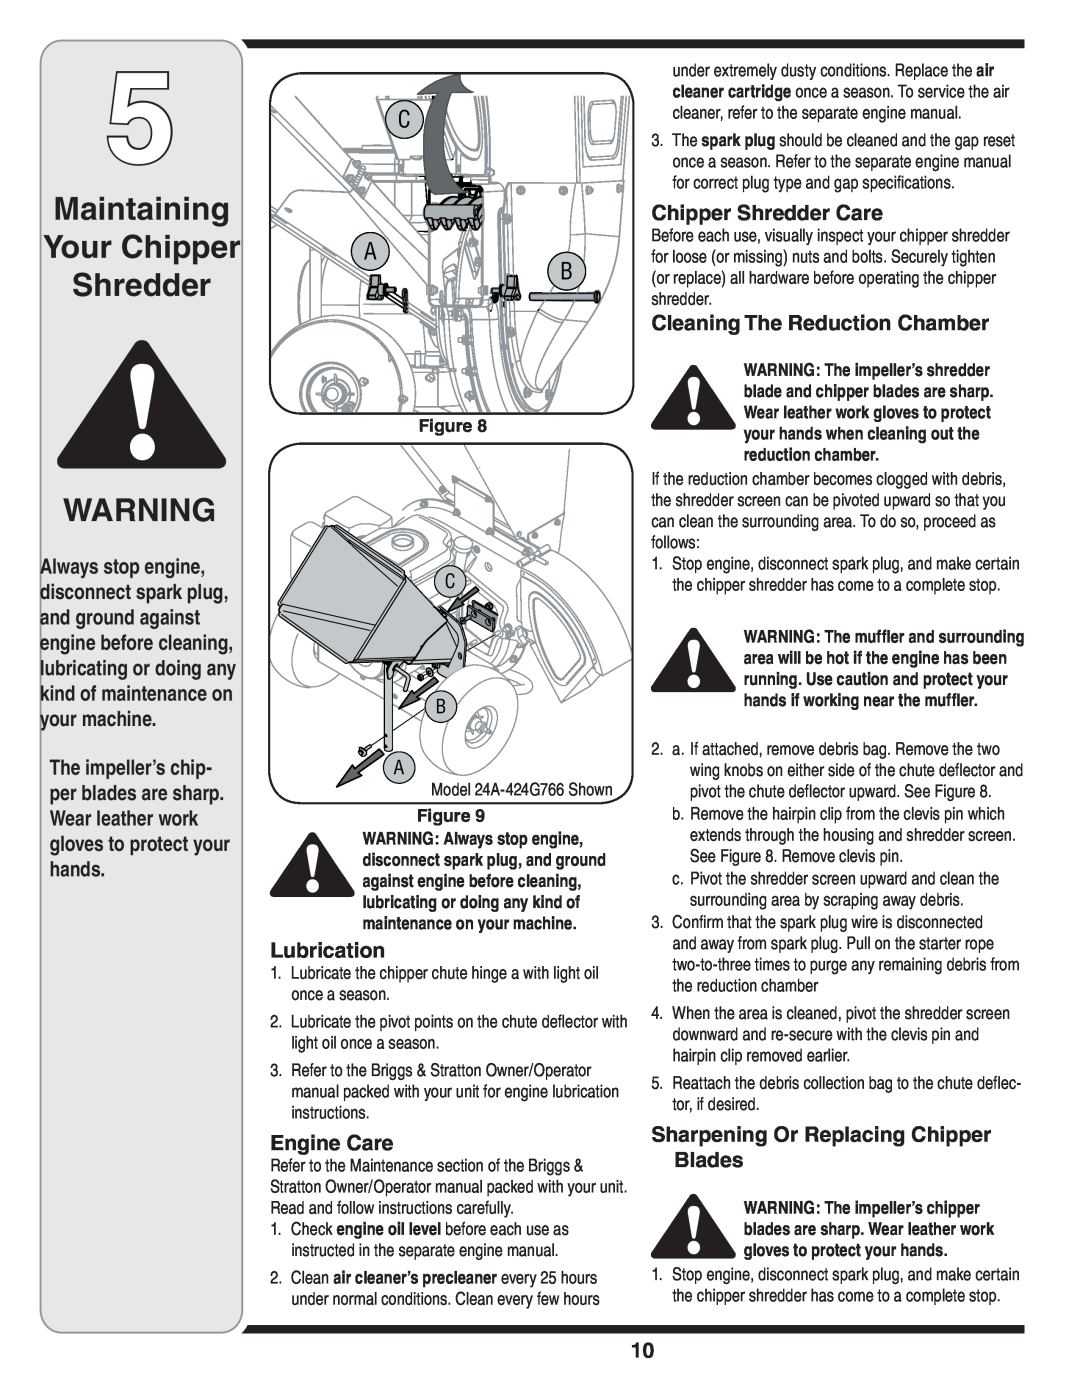 Troy-Bilt 414, 424 manual Maintaining Your Chipper Shredder, Lubrication, Engine Care, Chipper Shredder Care 